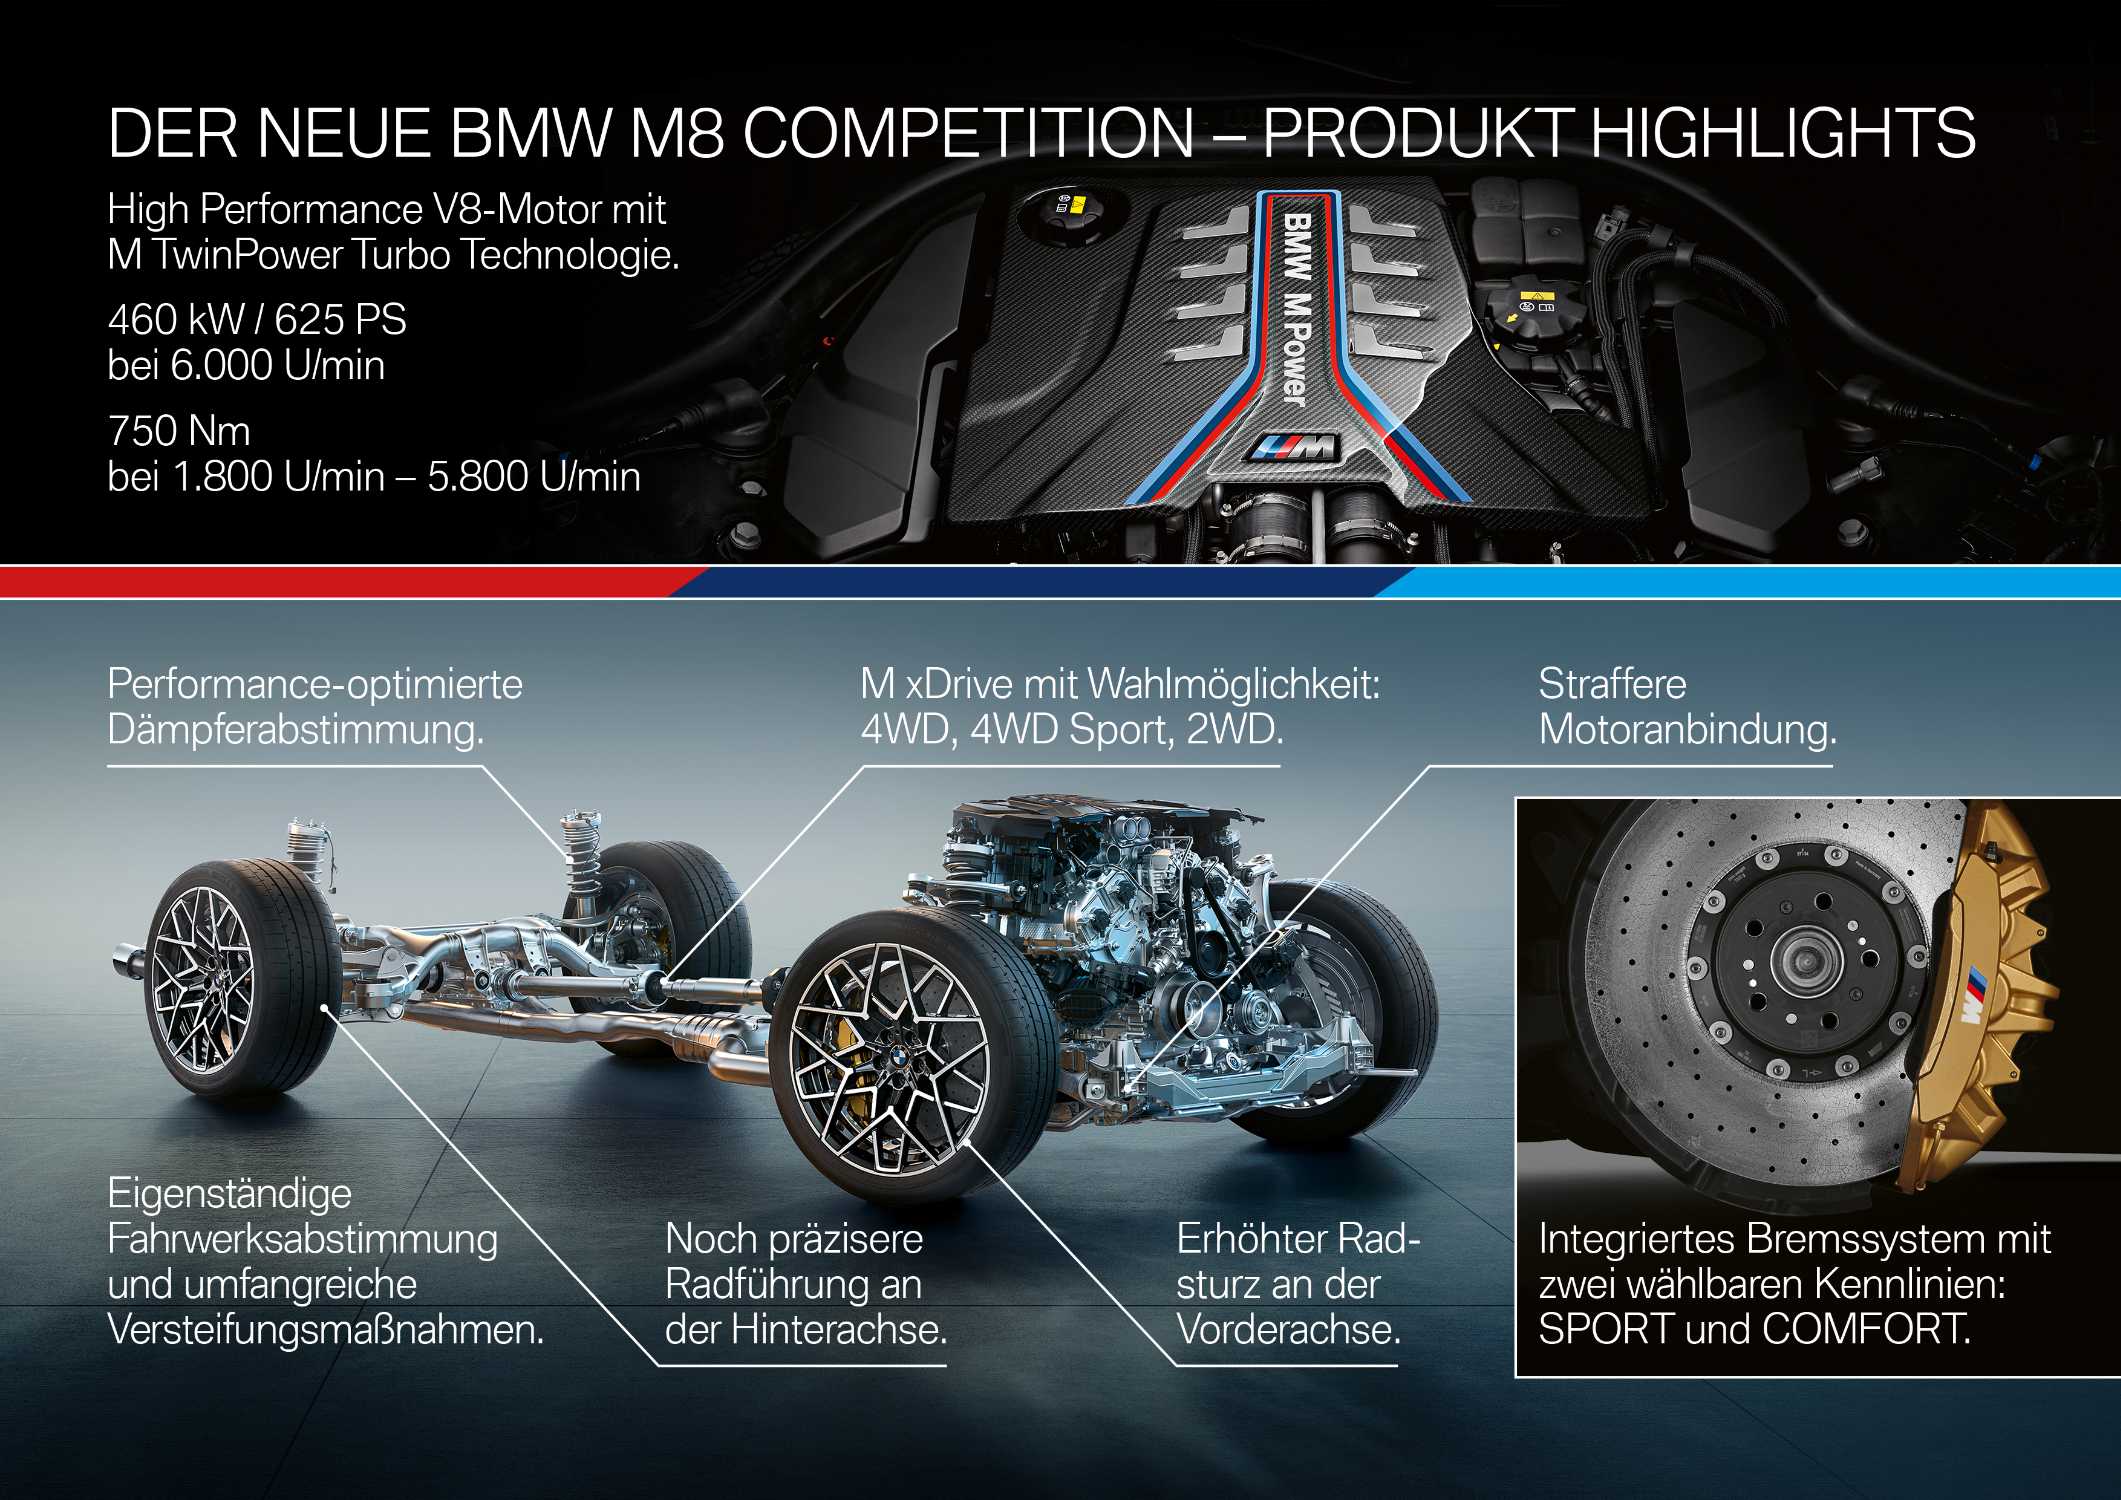 Das neue BMW M8 Competition Coupé und das neue BMW M8 Competition Cabriolet (06/2019).